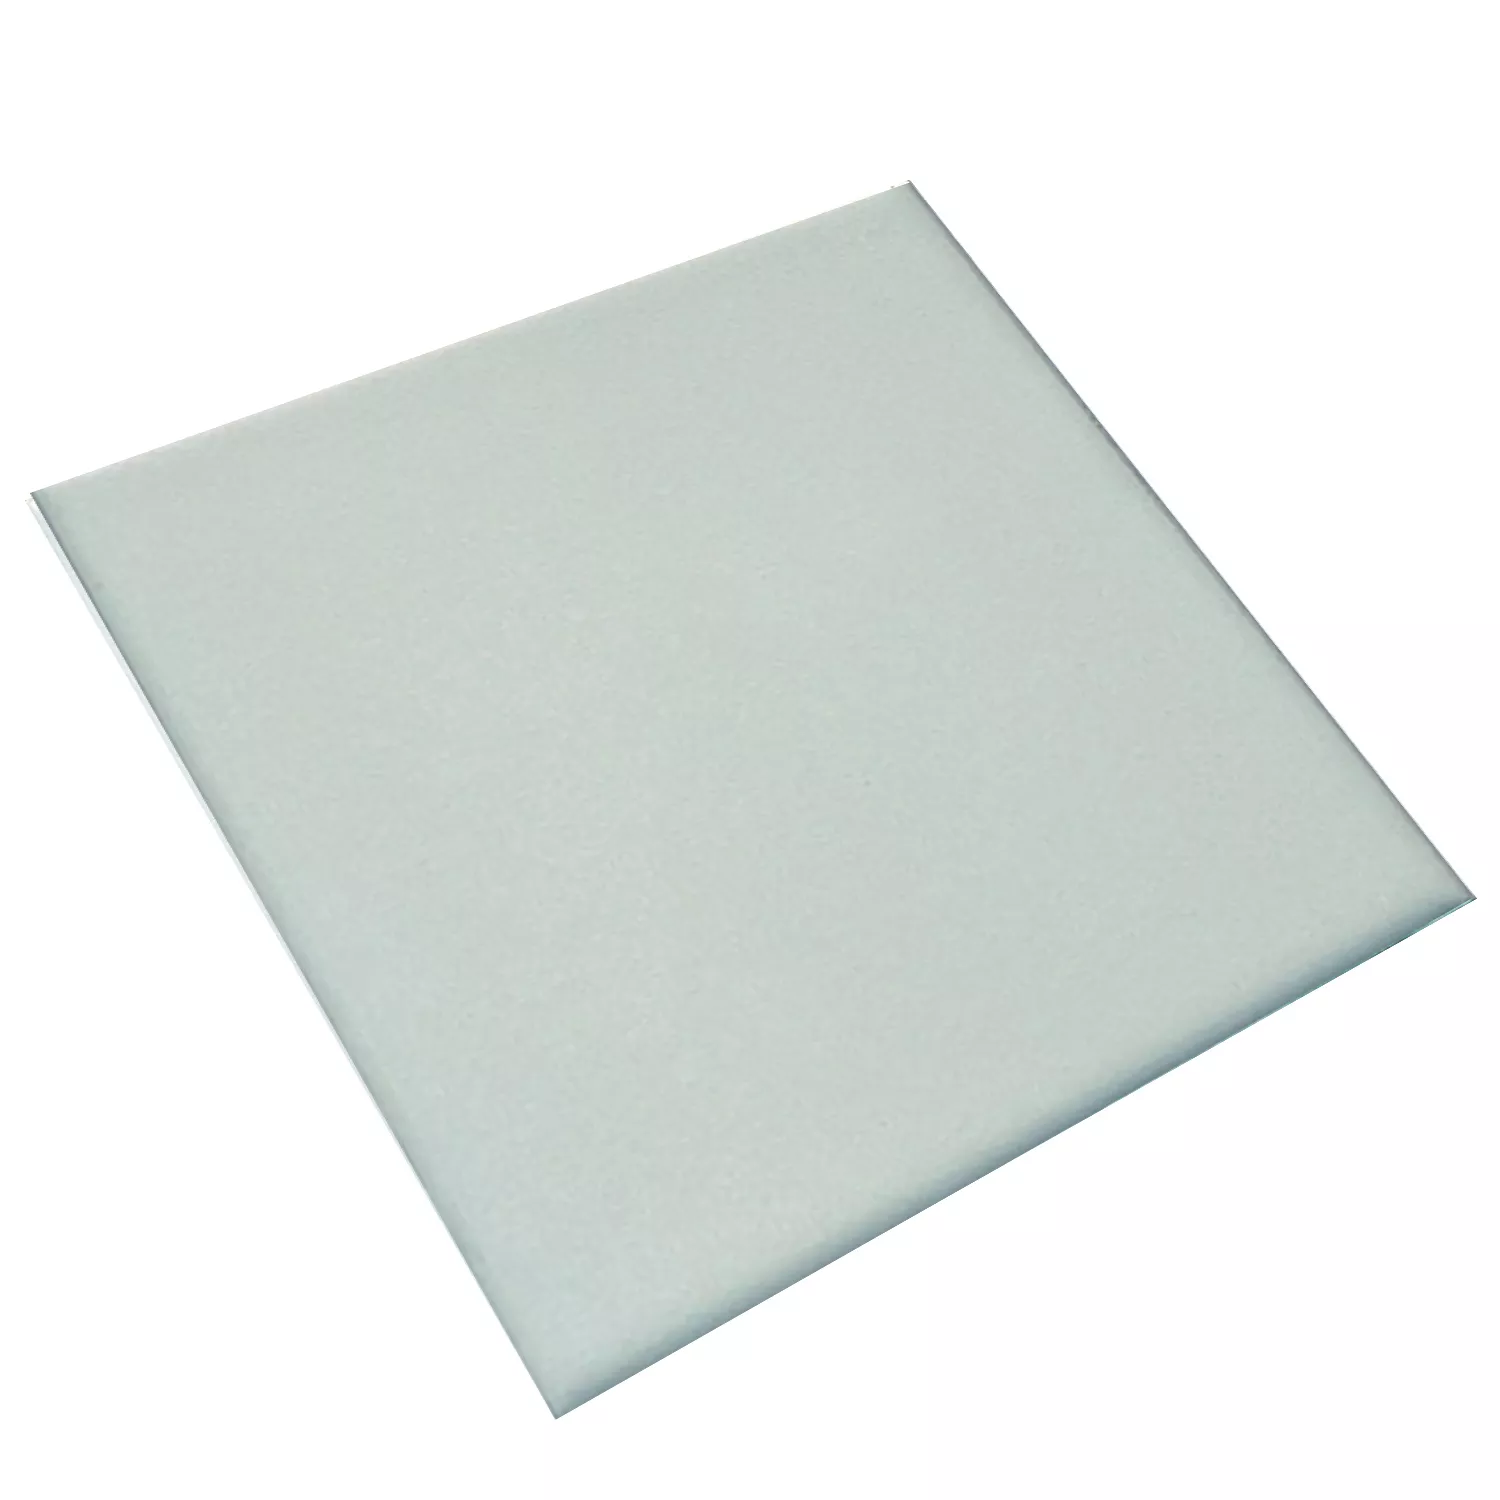 Sample Floor Tiles Adventure R10/B Light Grey Mat 15x15cm